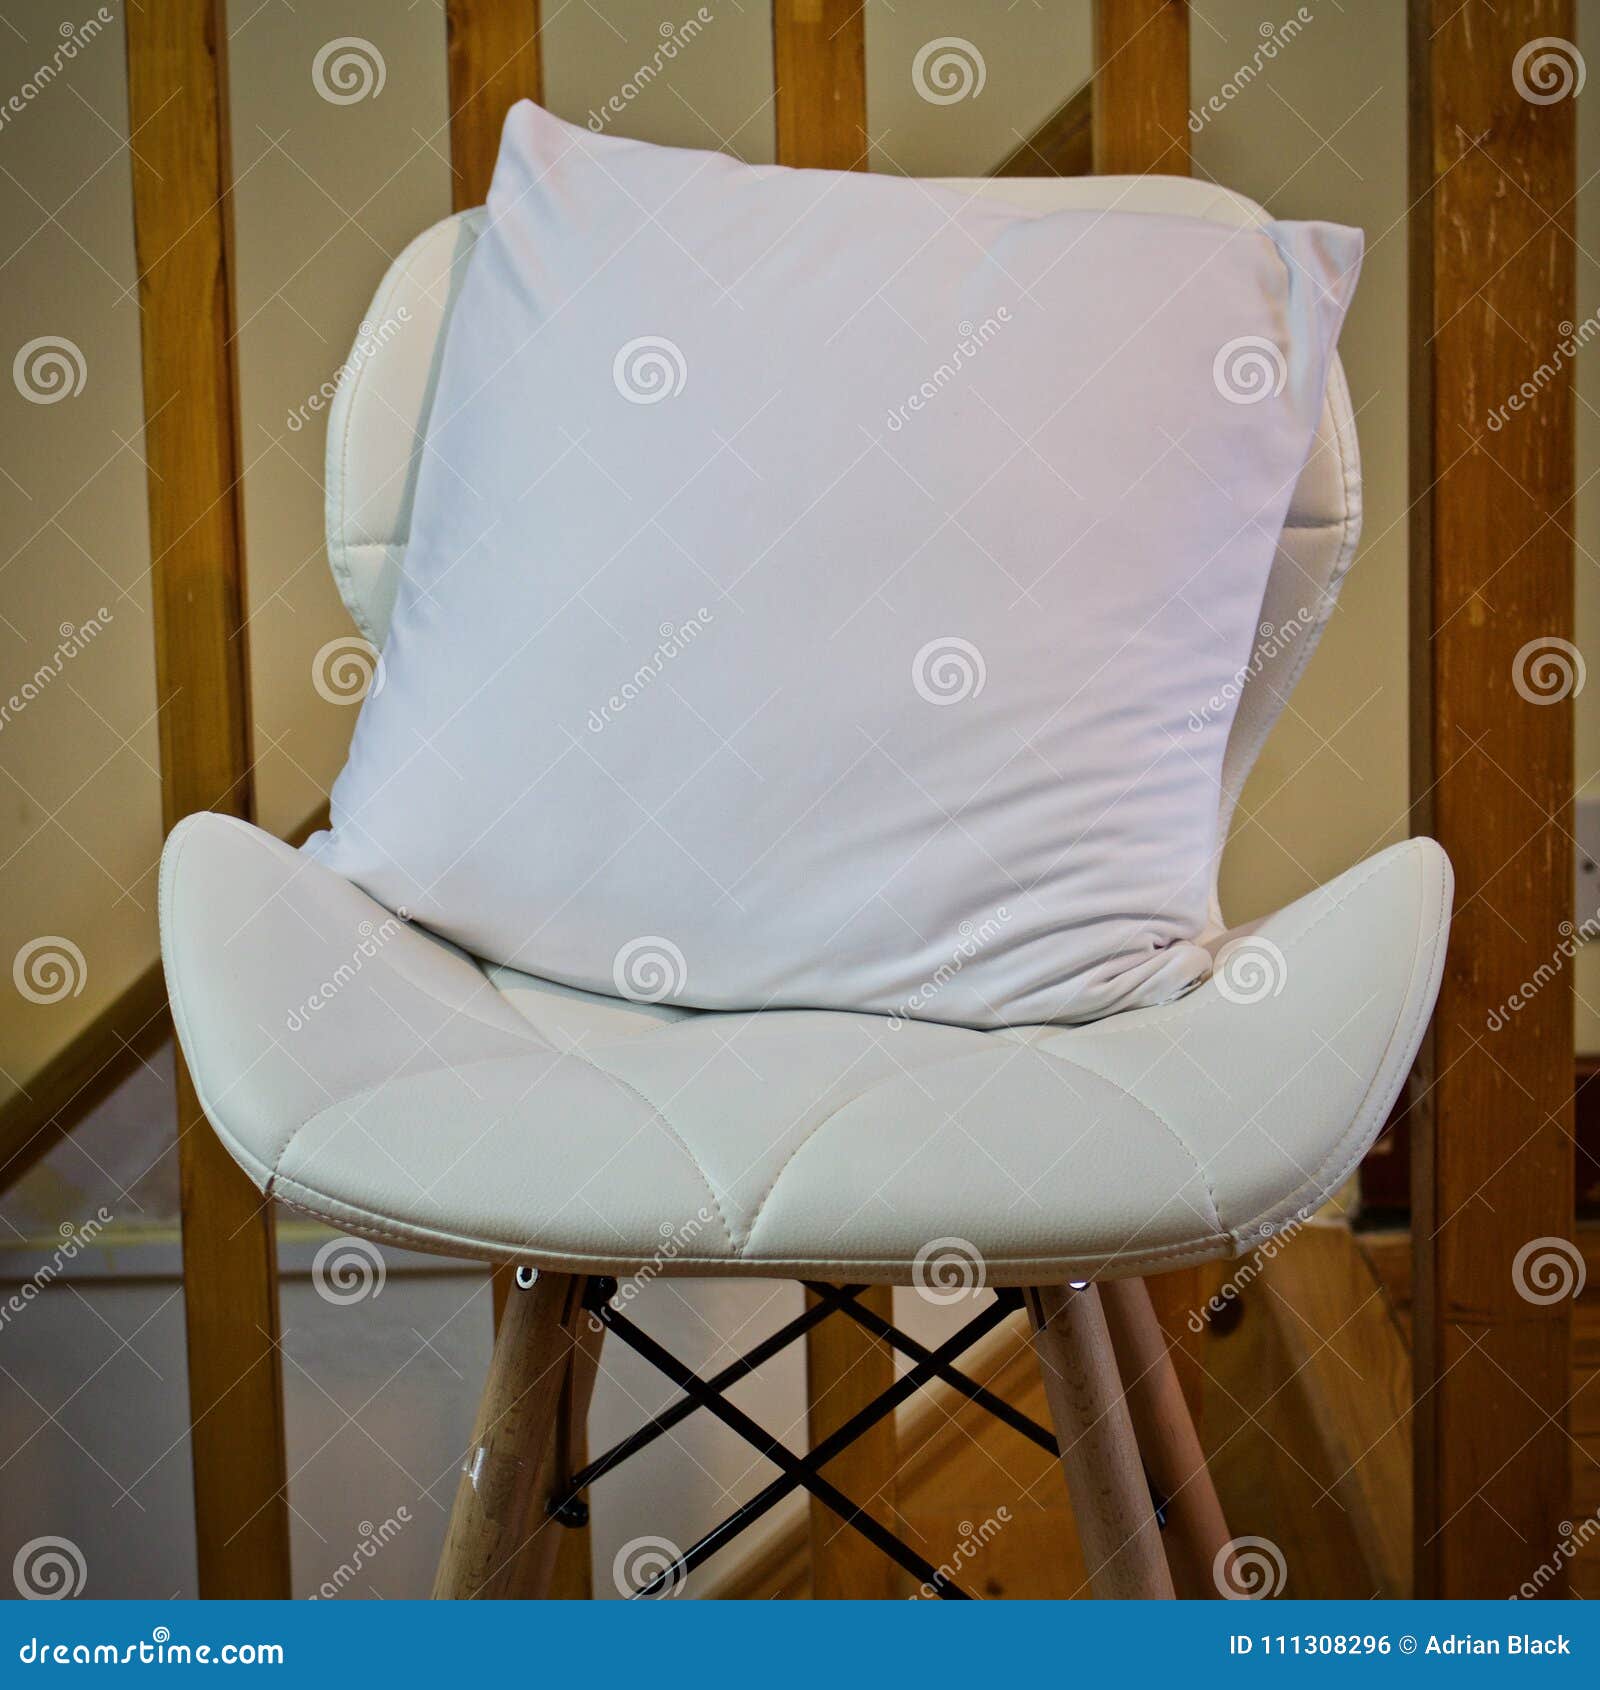 https://thumbs.dreamstime.com/z/white-small-pillow-chair-small-pillow-mockup-white-small-pillow-mockup-111308296.jpg